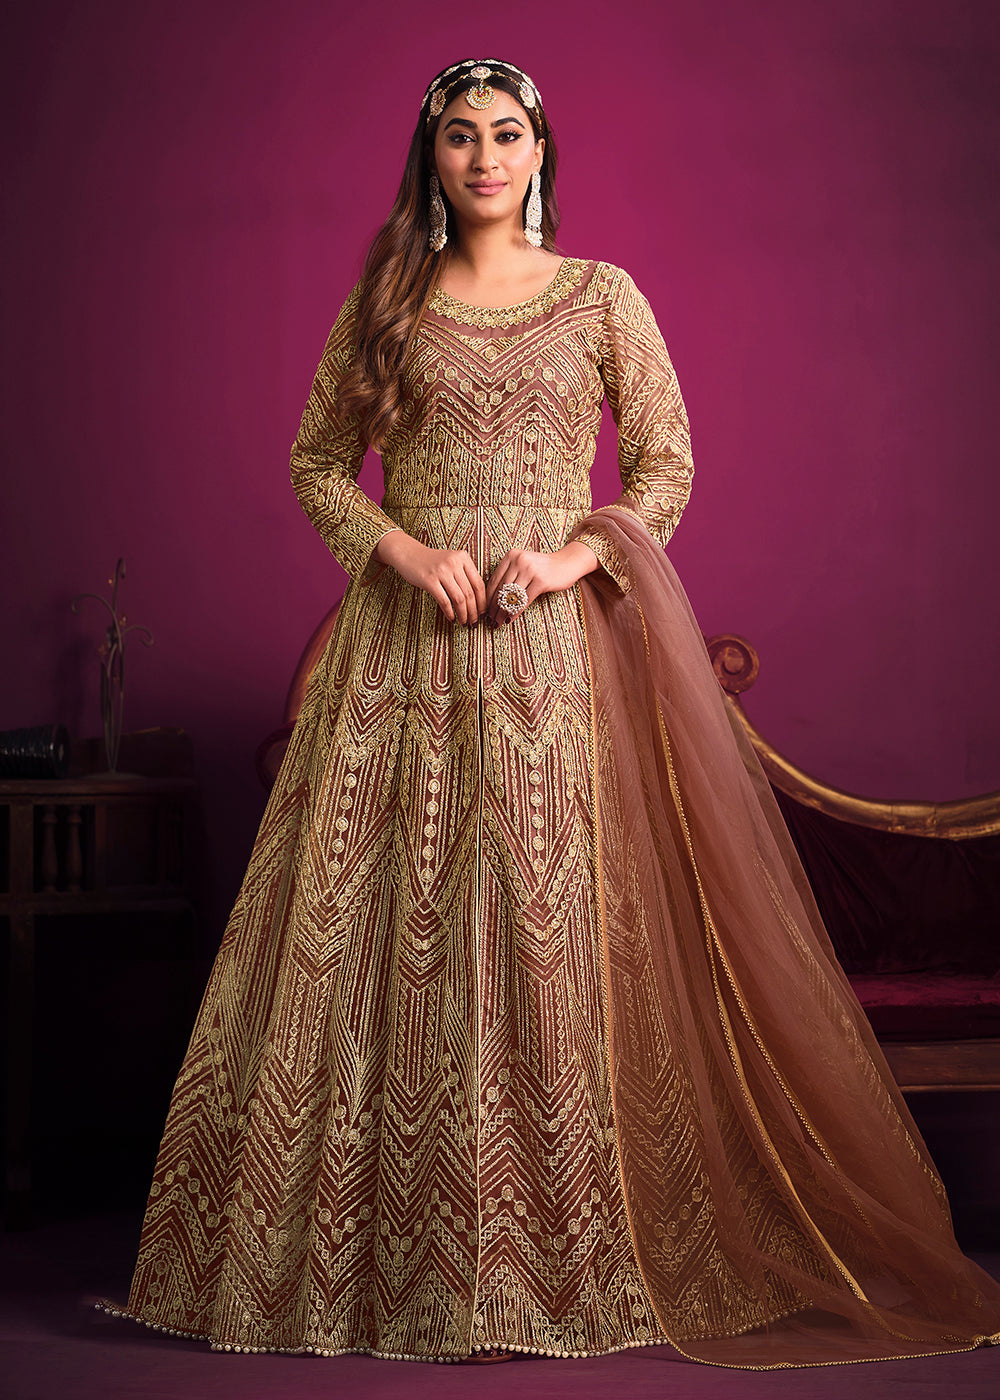 Buy Now Net Brownish Peach Floor Length Sangeet Wear Anarkali Suit Online in USA, UK, Australia, New Zealand, Canada, Italy & Worldwide at Empress Clothing. 